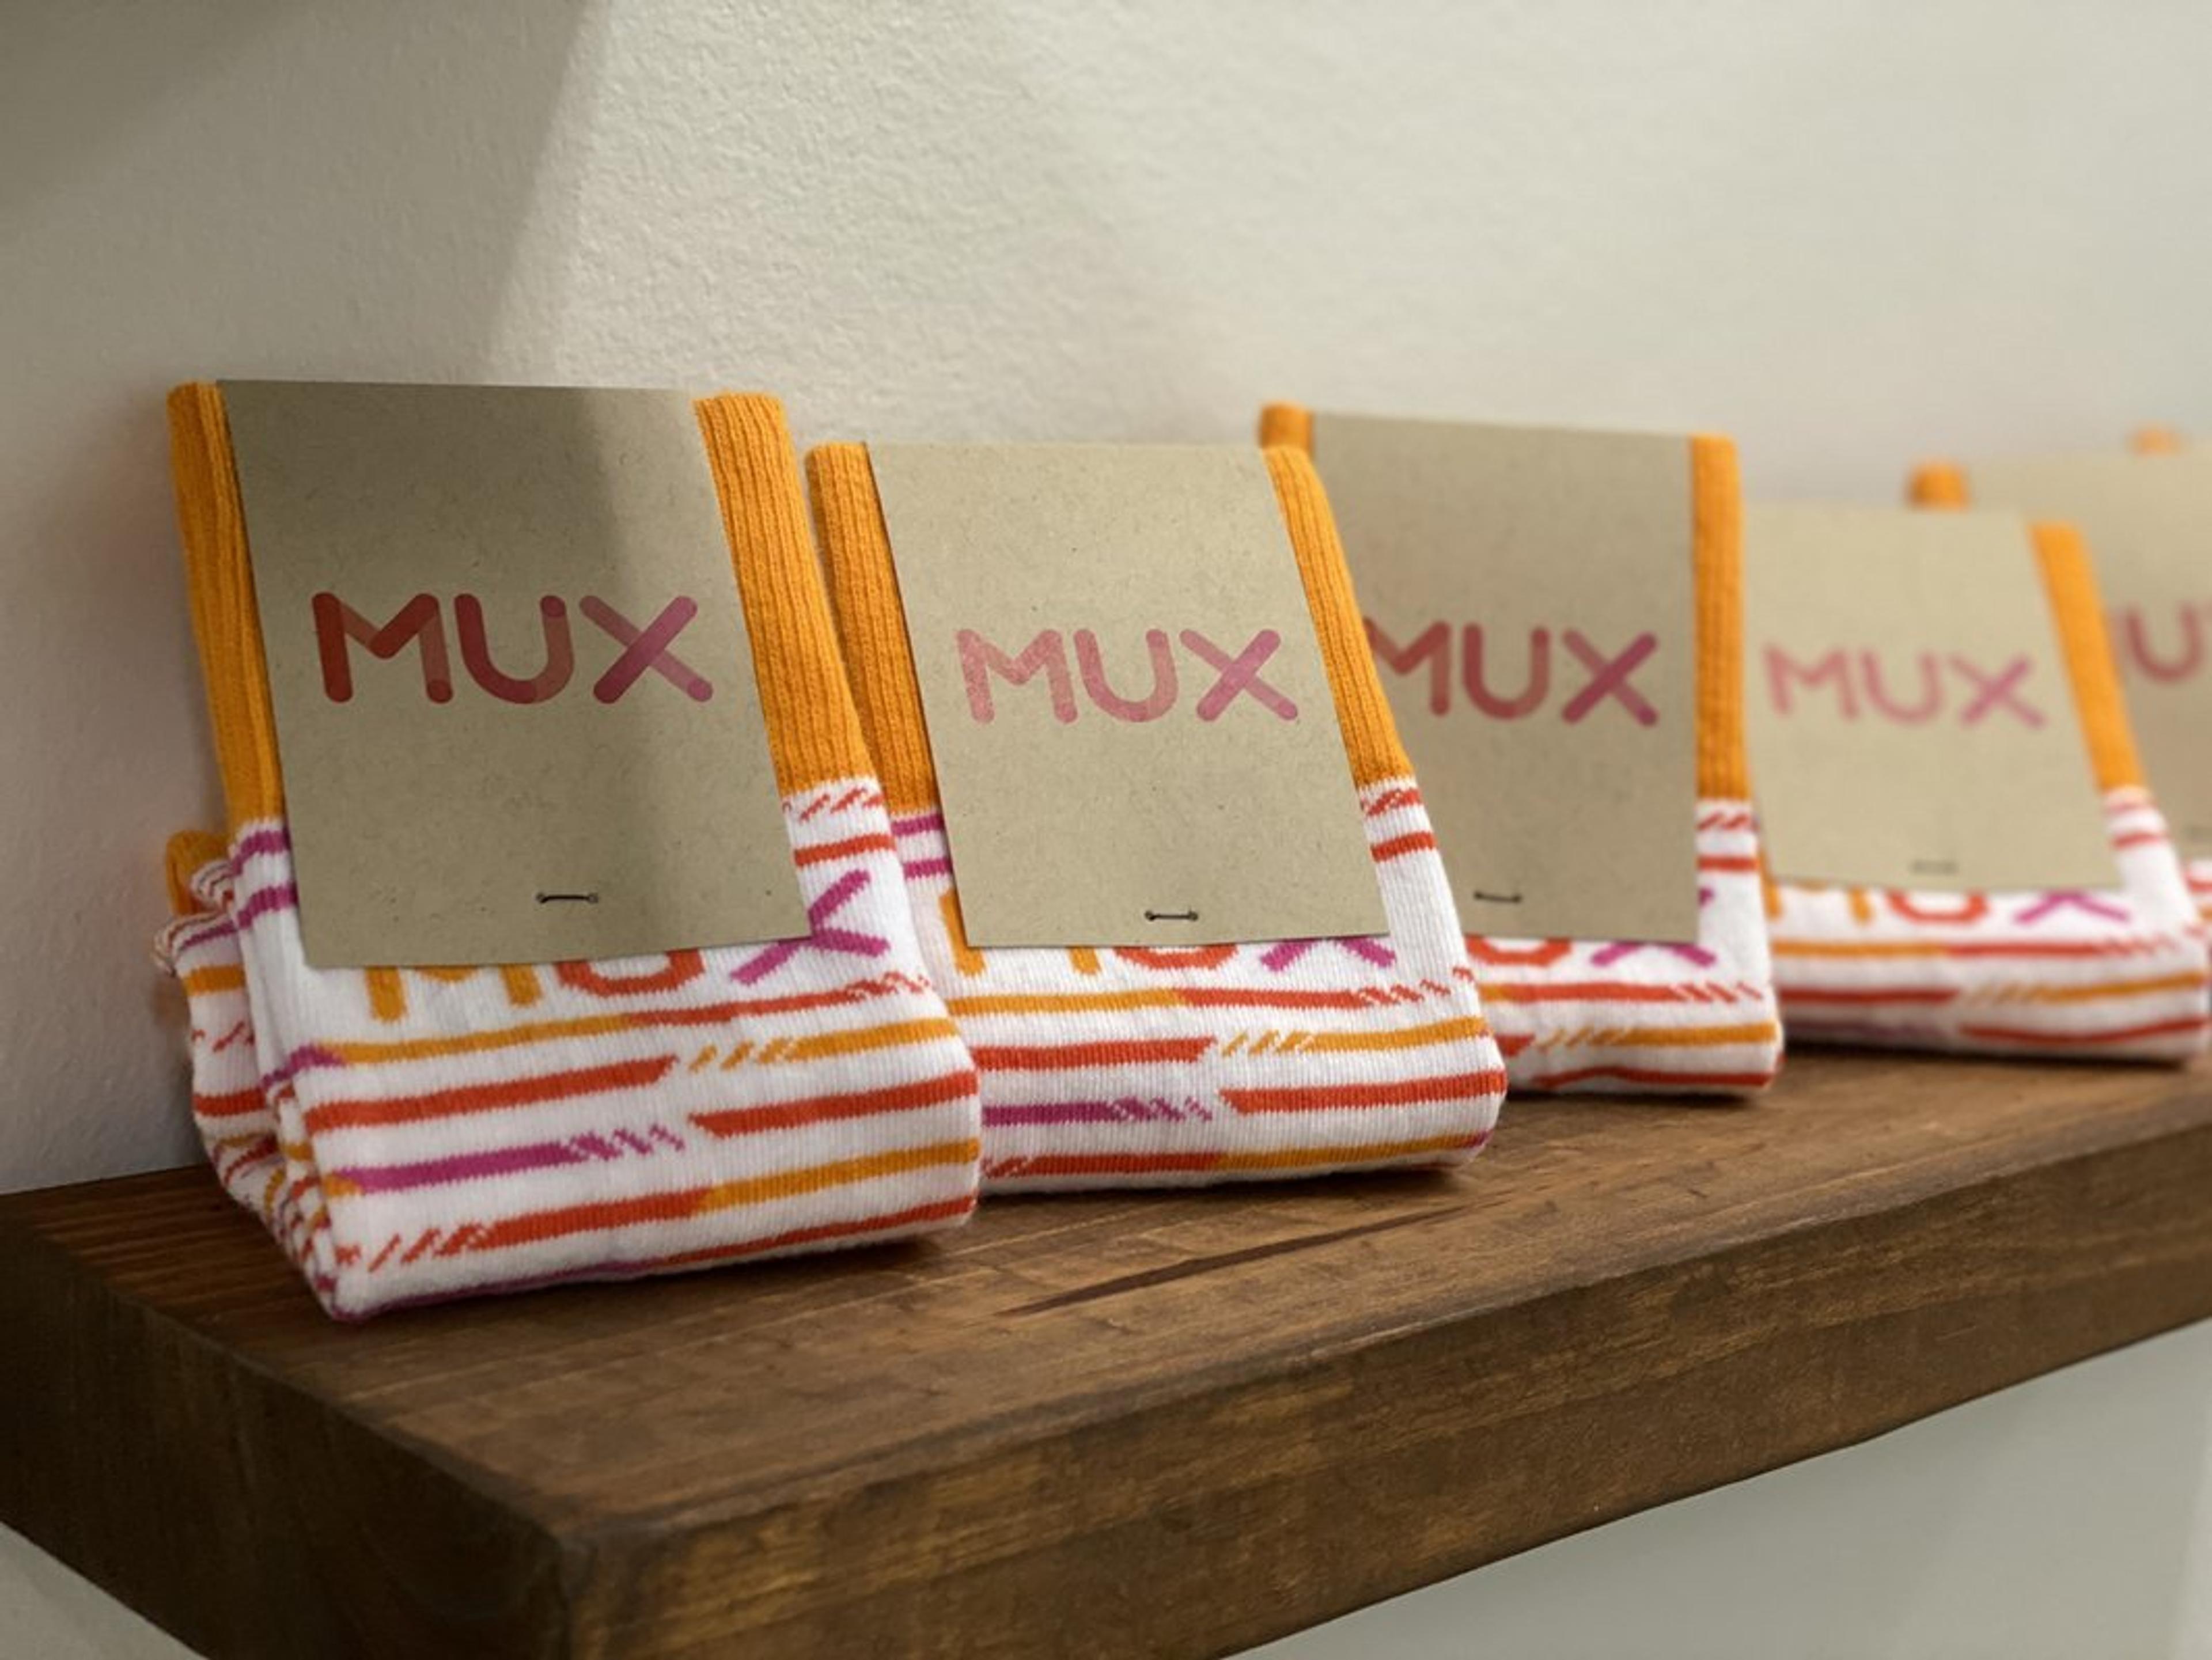 An image of Mux branded socks